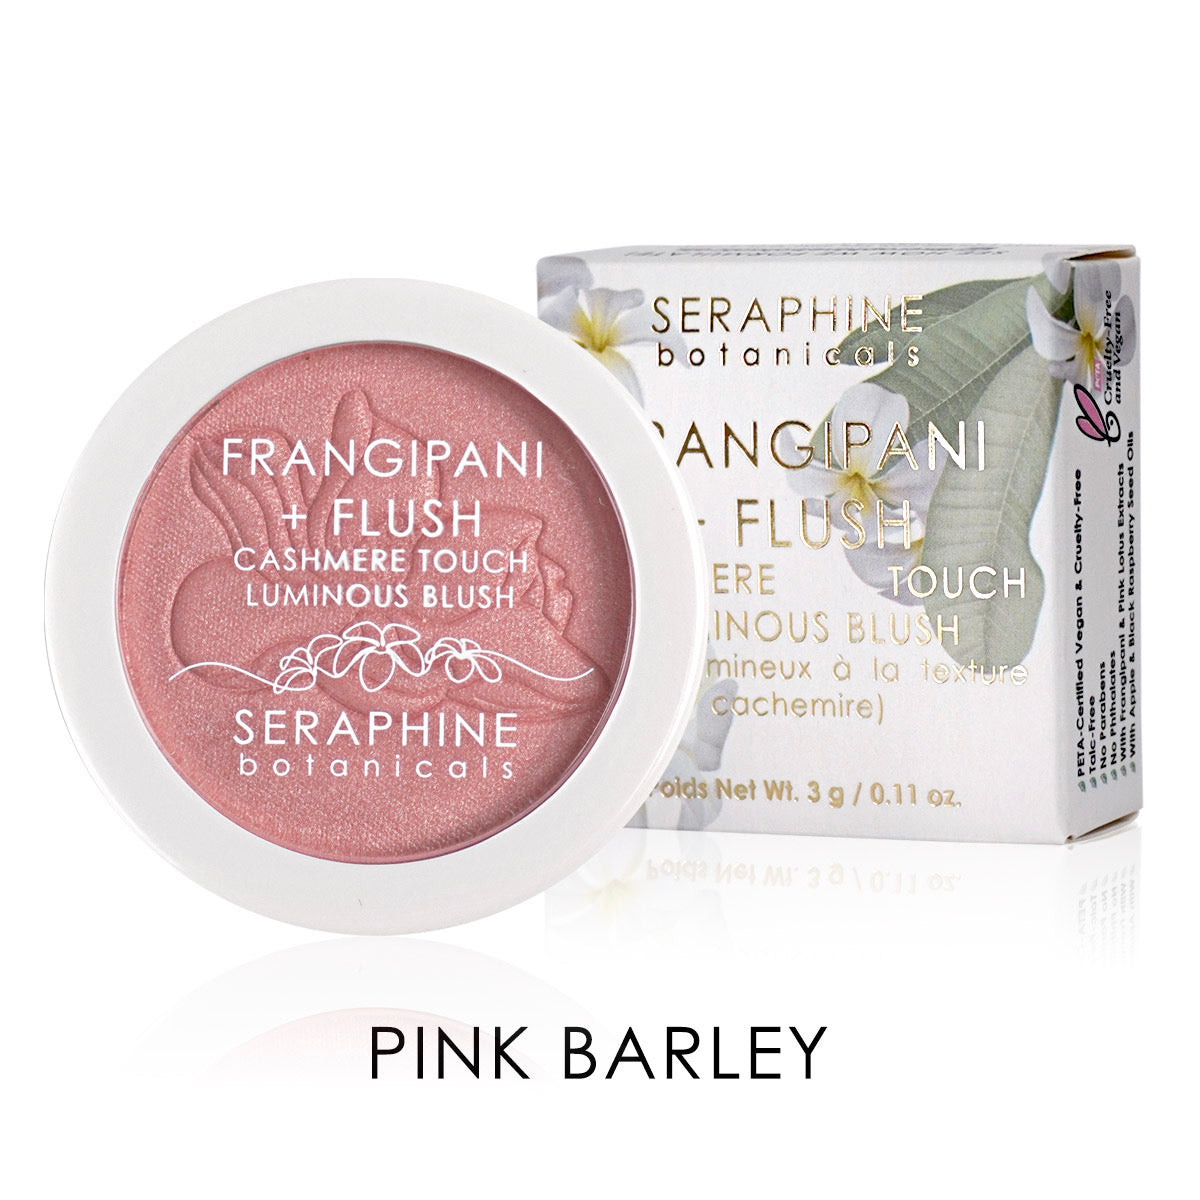 Frangipani + Flush - Cashmere Touch Luminous Blush – Seraphine